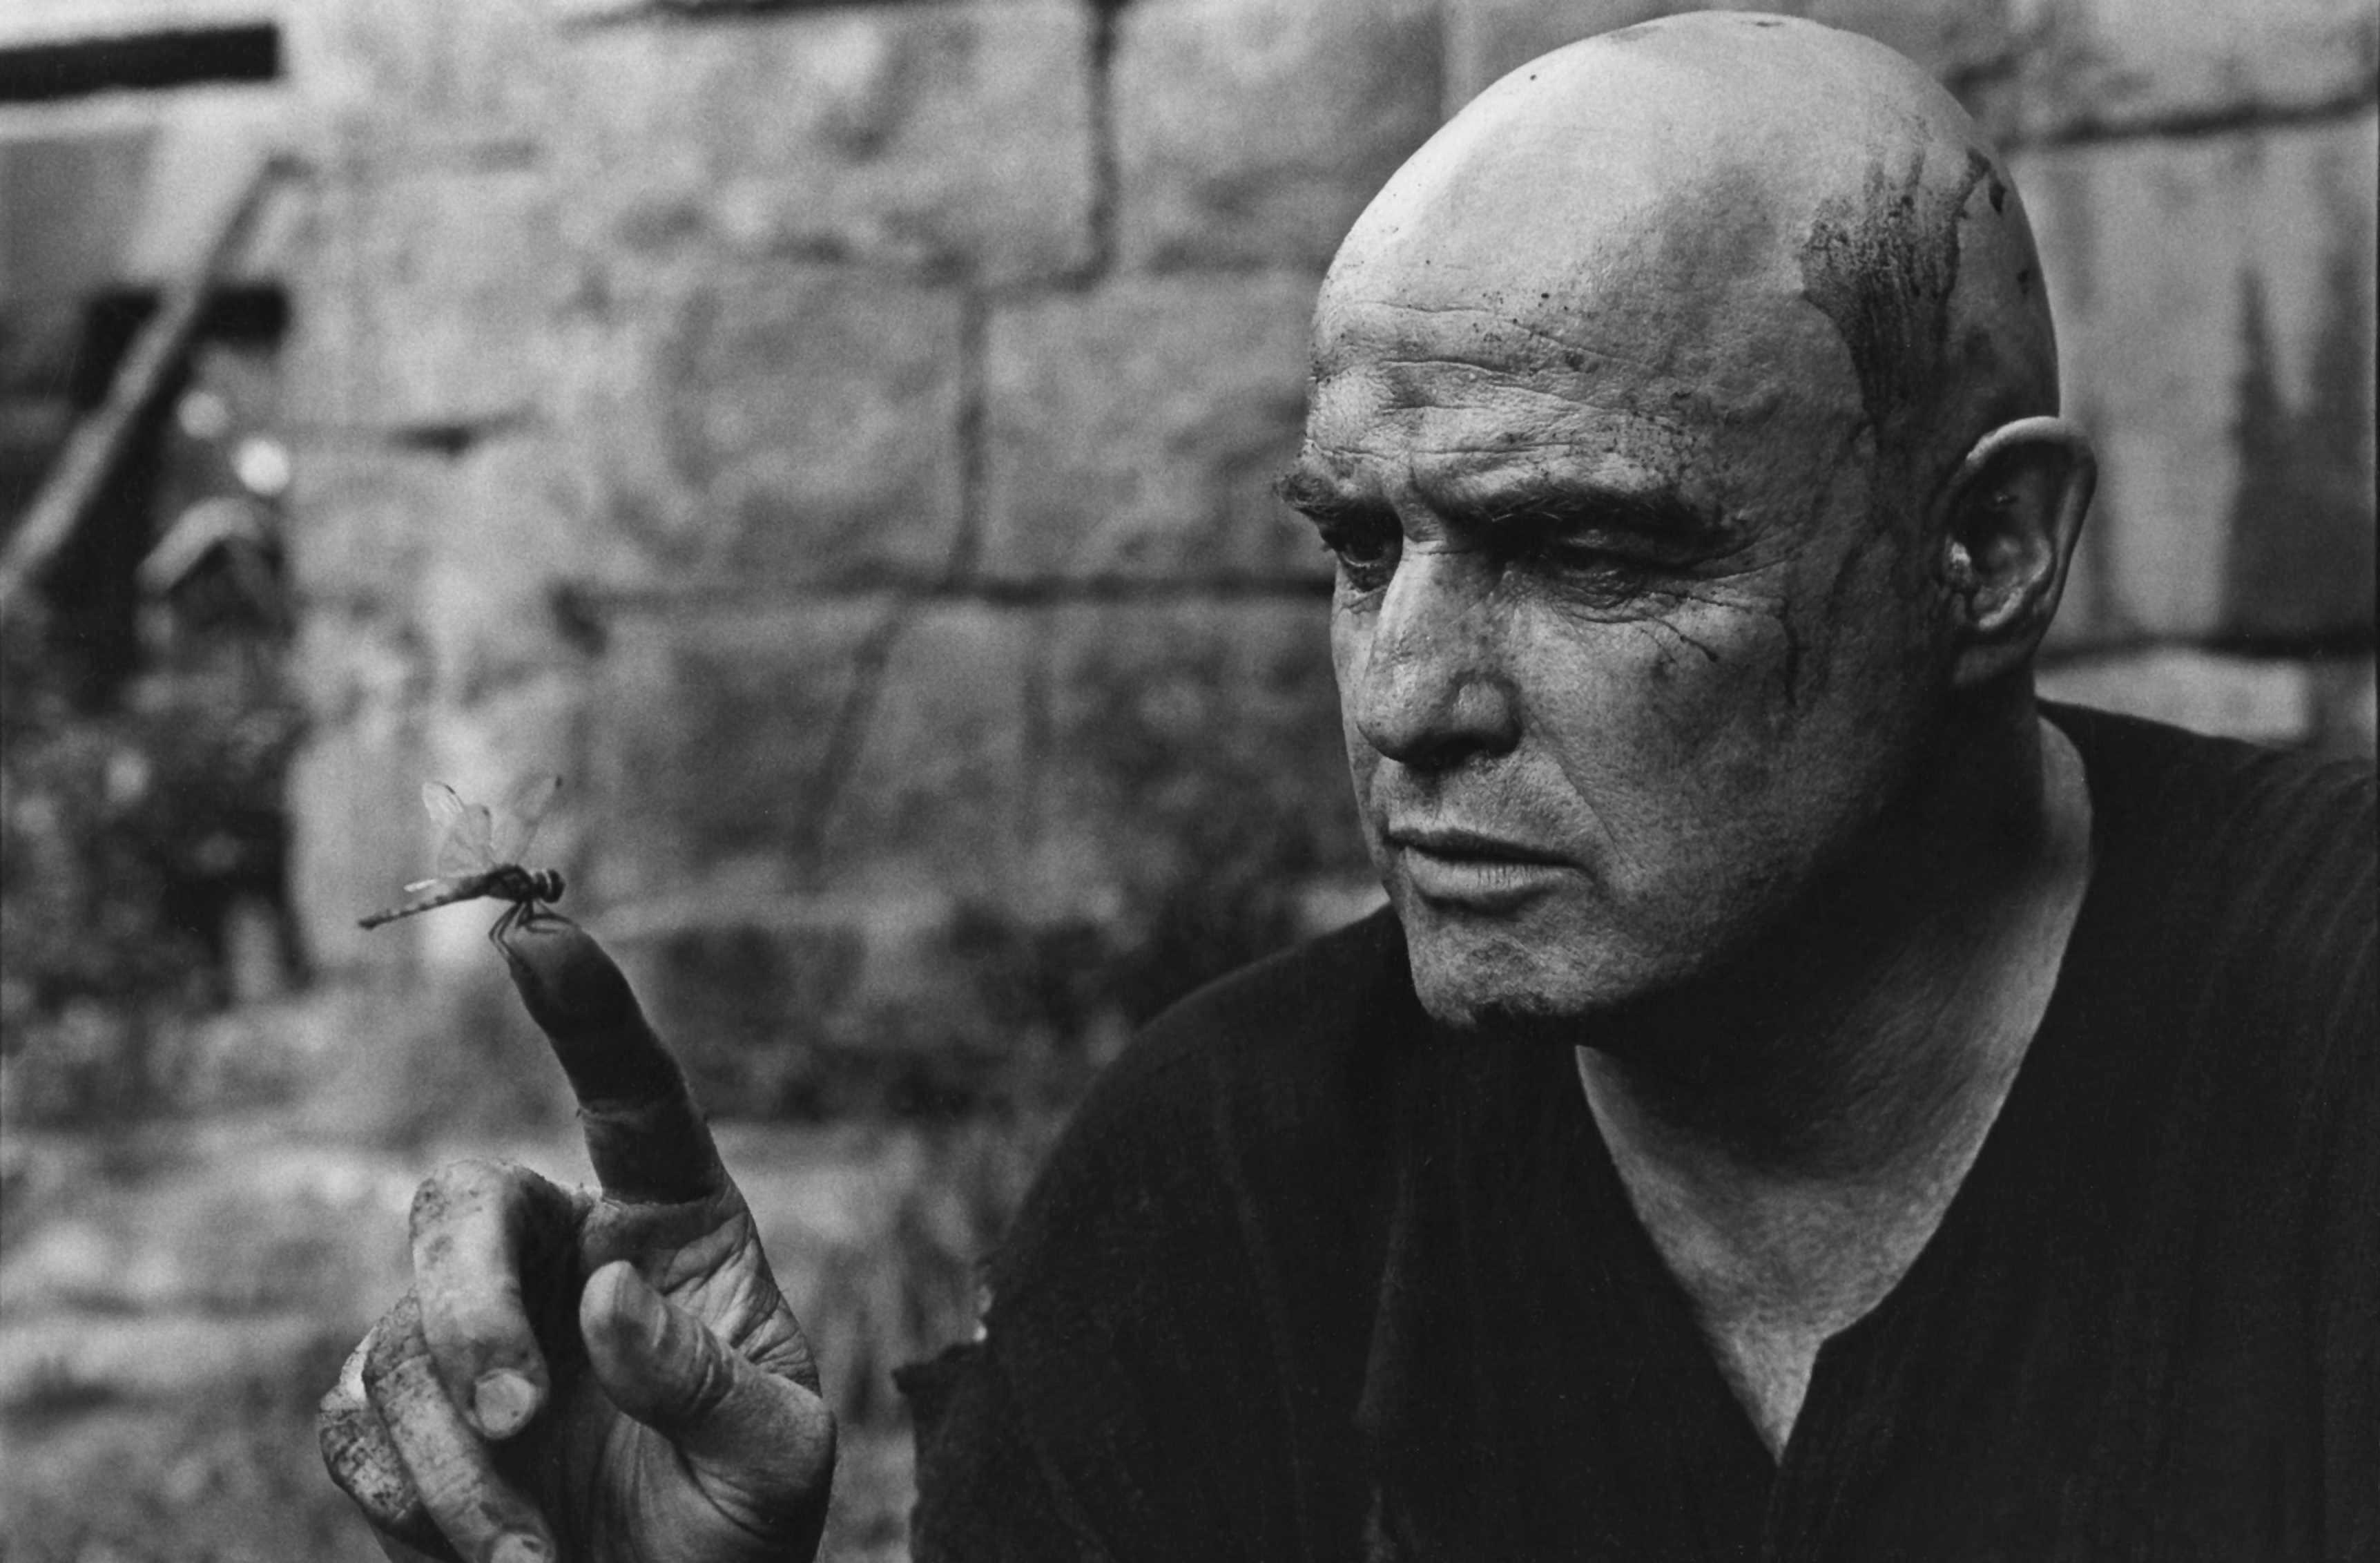 People 3447x2263 dragonflies monochrome shaved head photography Marlon Brando Apocalypse Now Francis Ford Coppola movies men